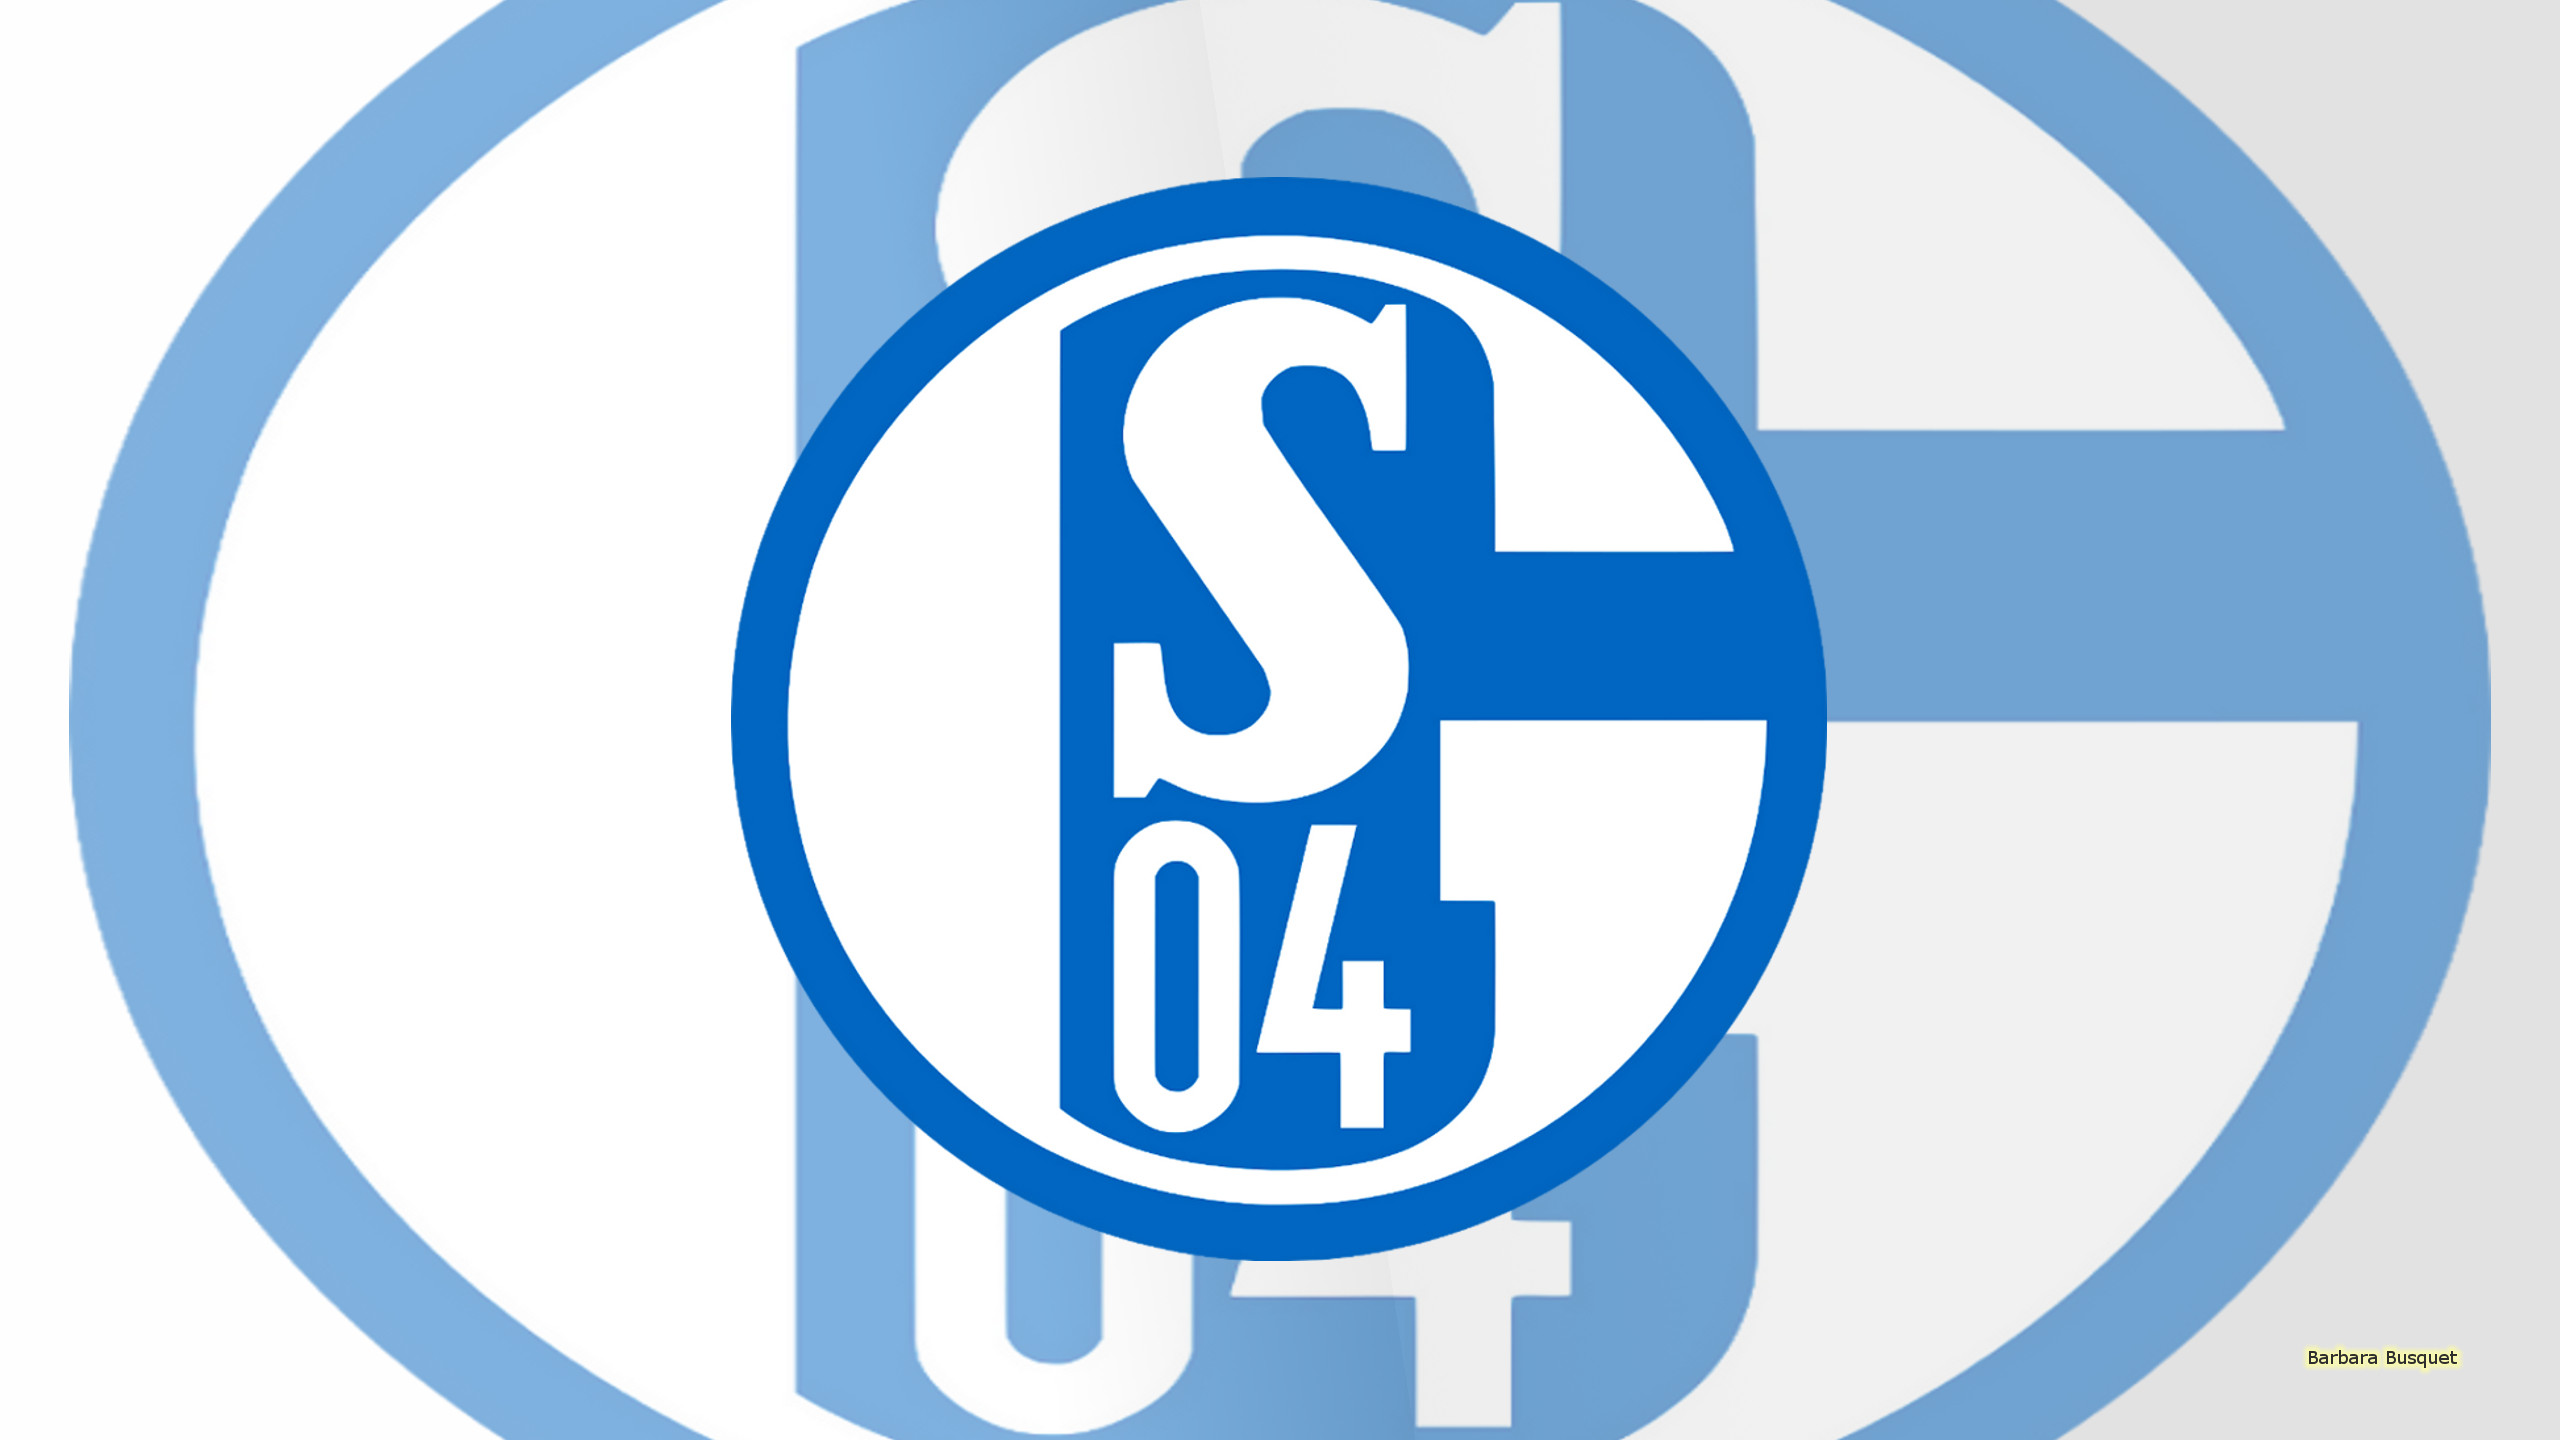 Fc Schalke 04 Logo Soccer 2560x1440